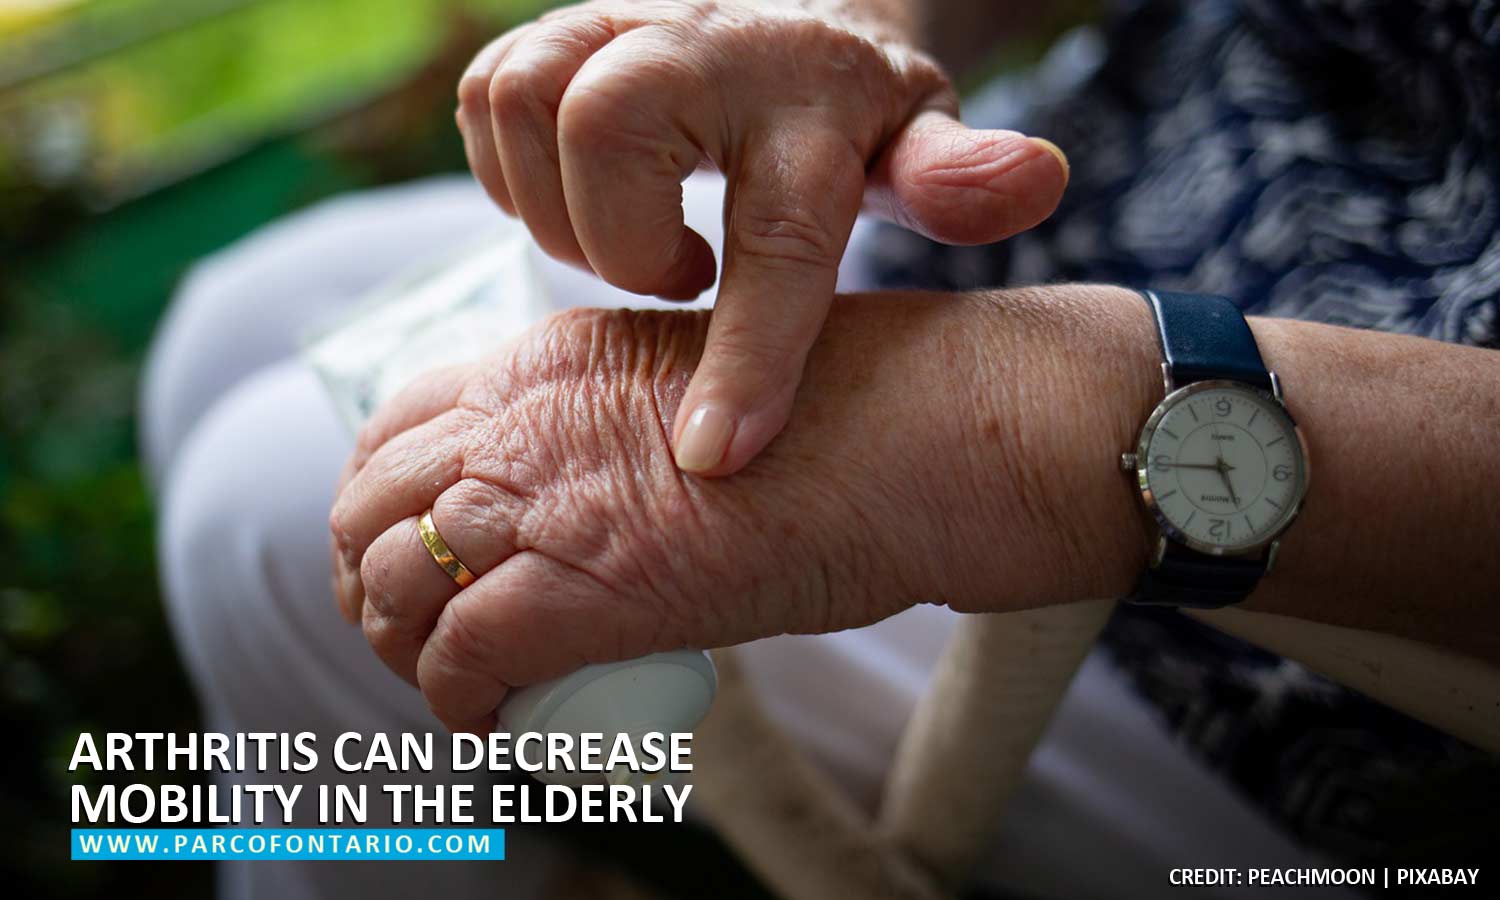 Arthritis can decrease mobility in the elderly